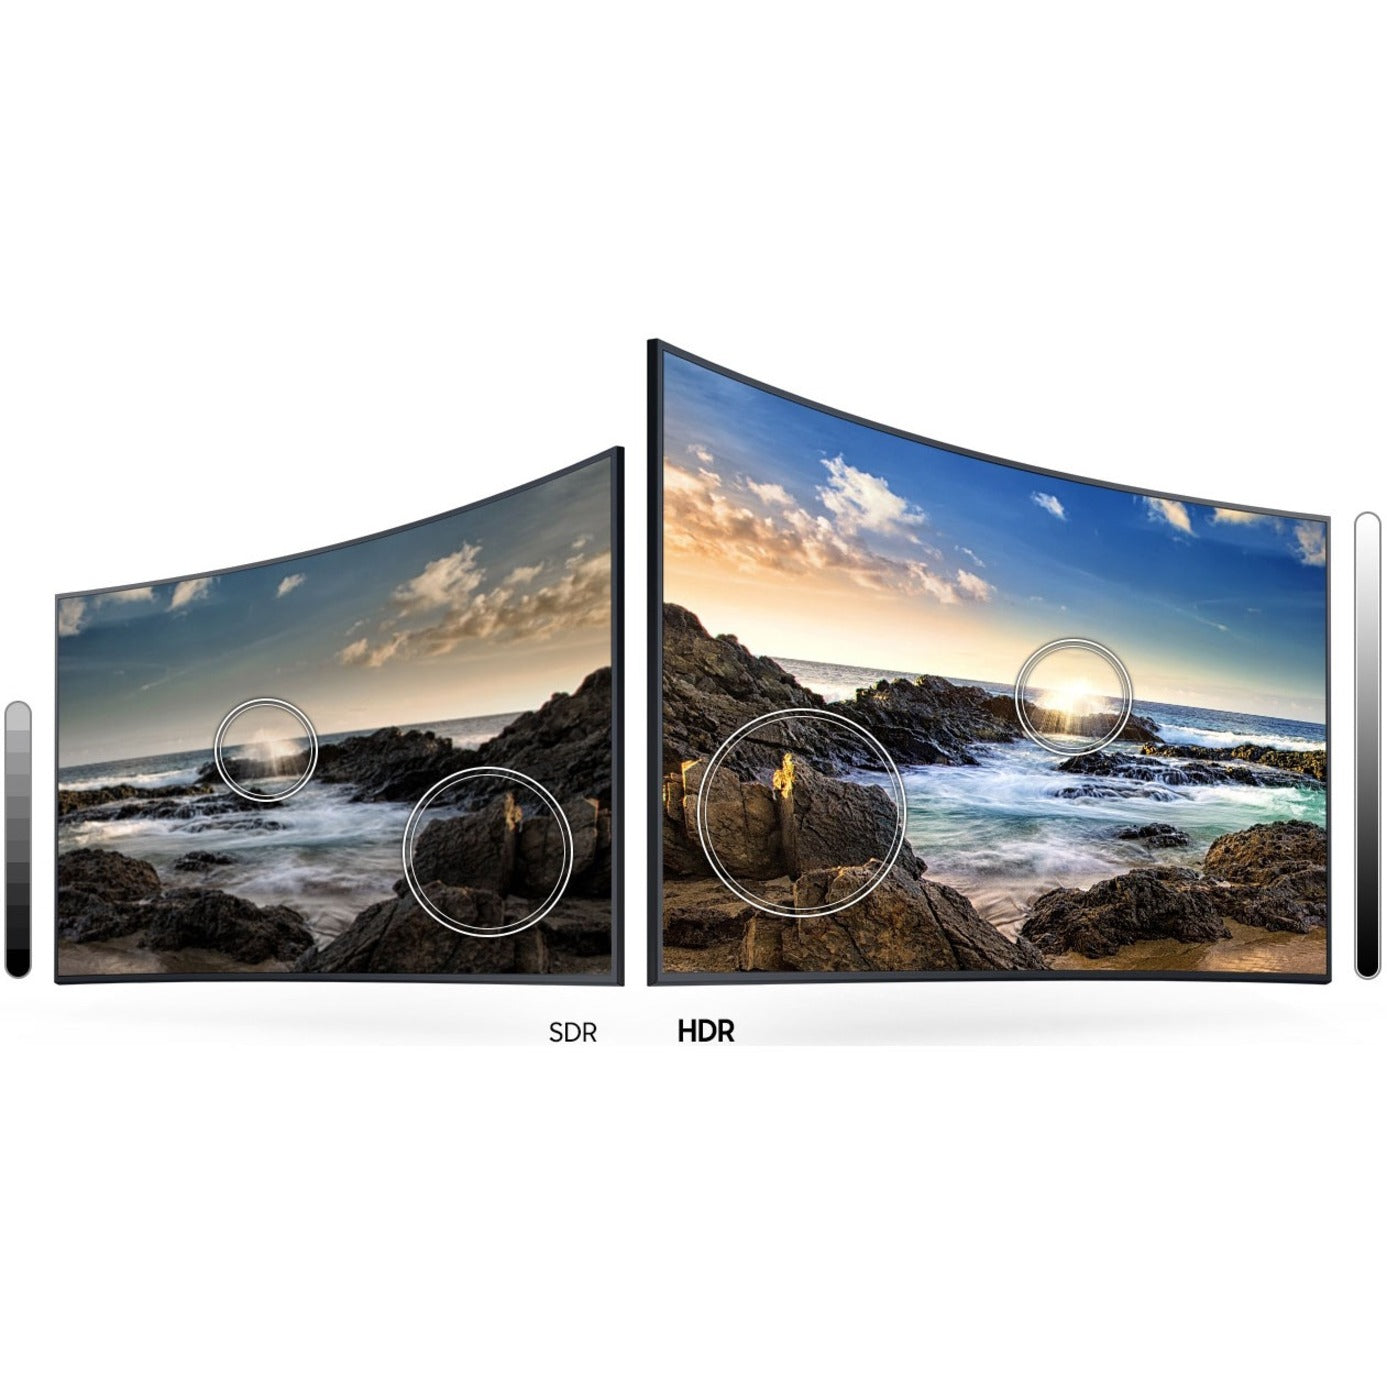 Samsung 8300 UN55TU8300 54.6" Curved Screen Smart LED-LCD TV - 4K UHDTV - Charcoal Black